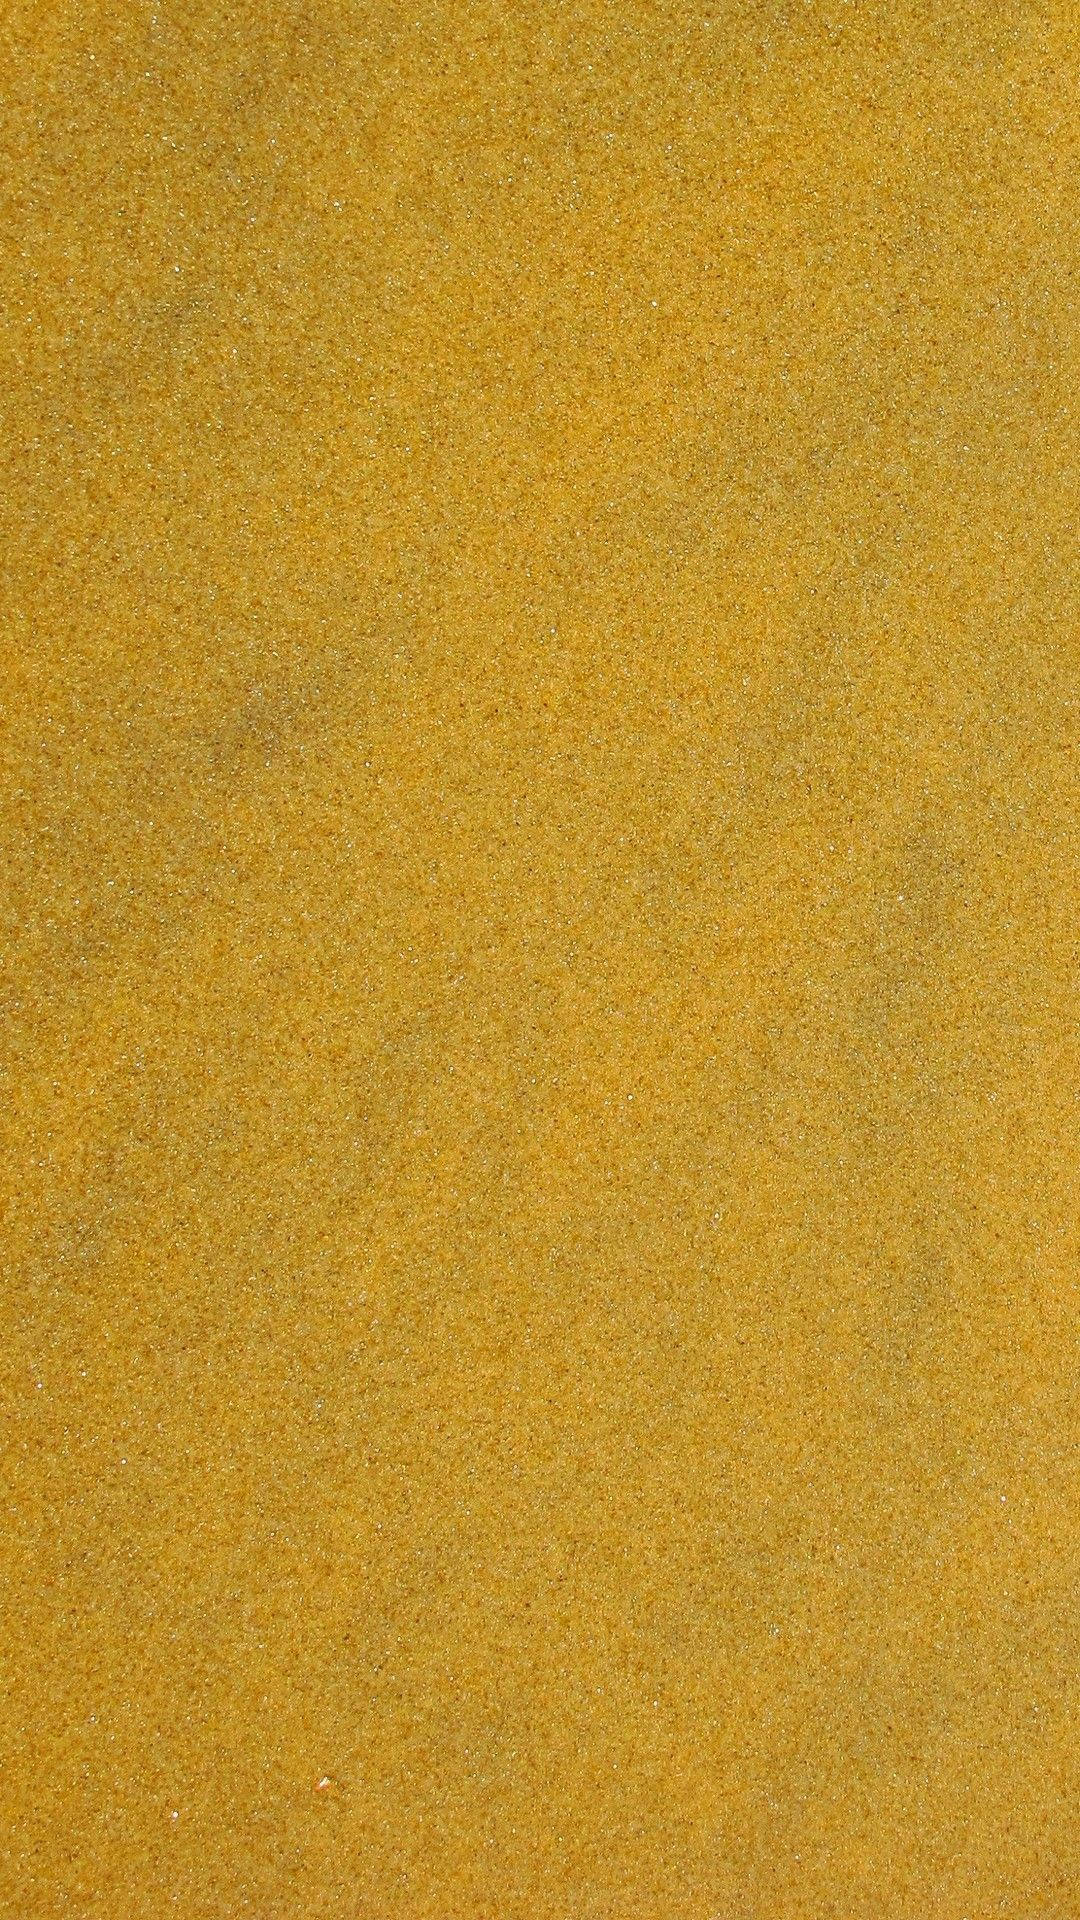 Plain Gold Texture Iphone Background